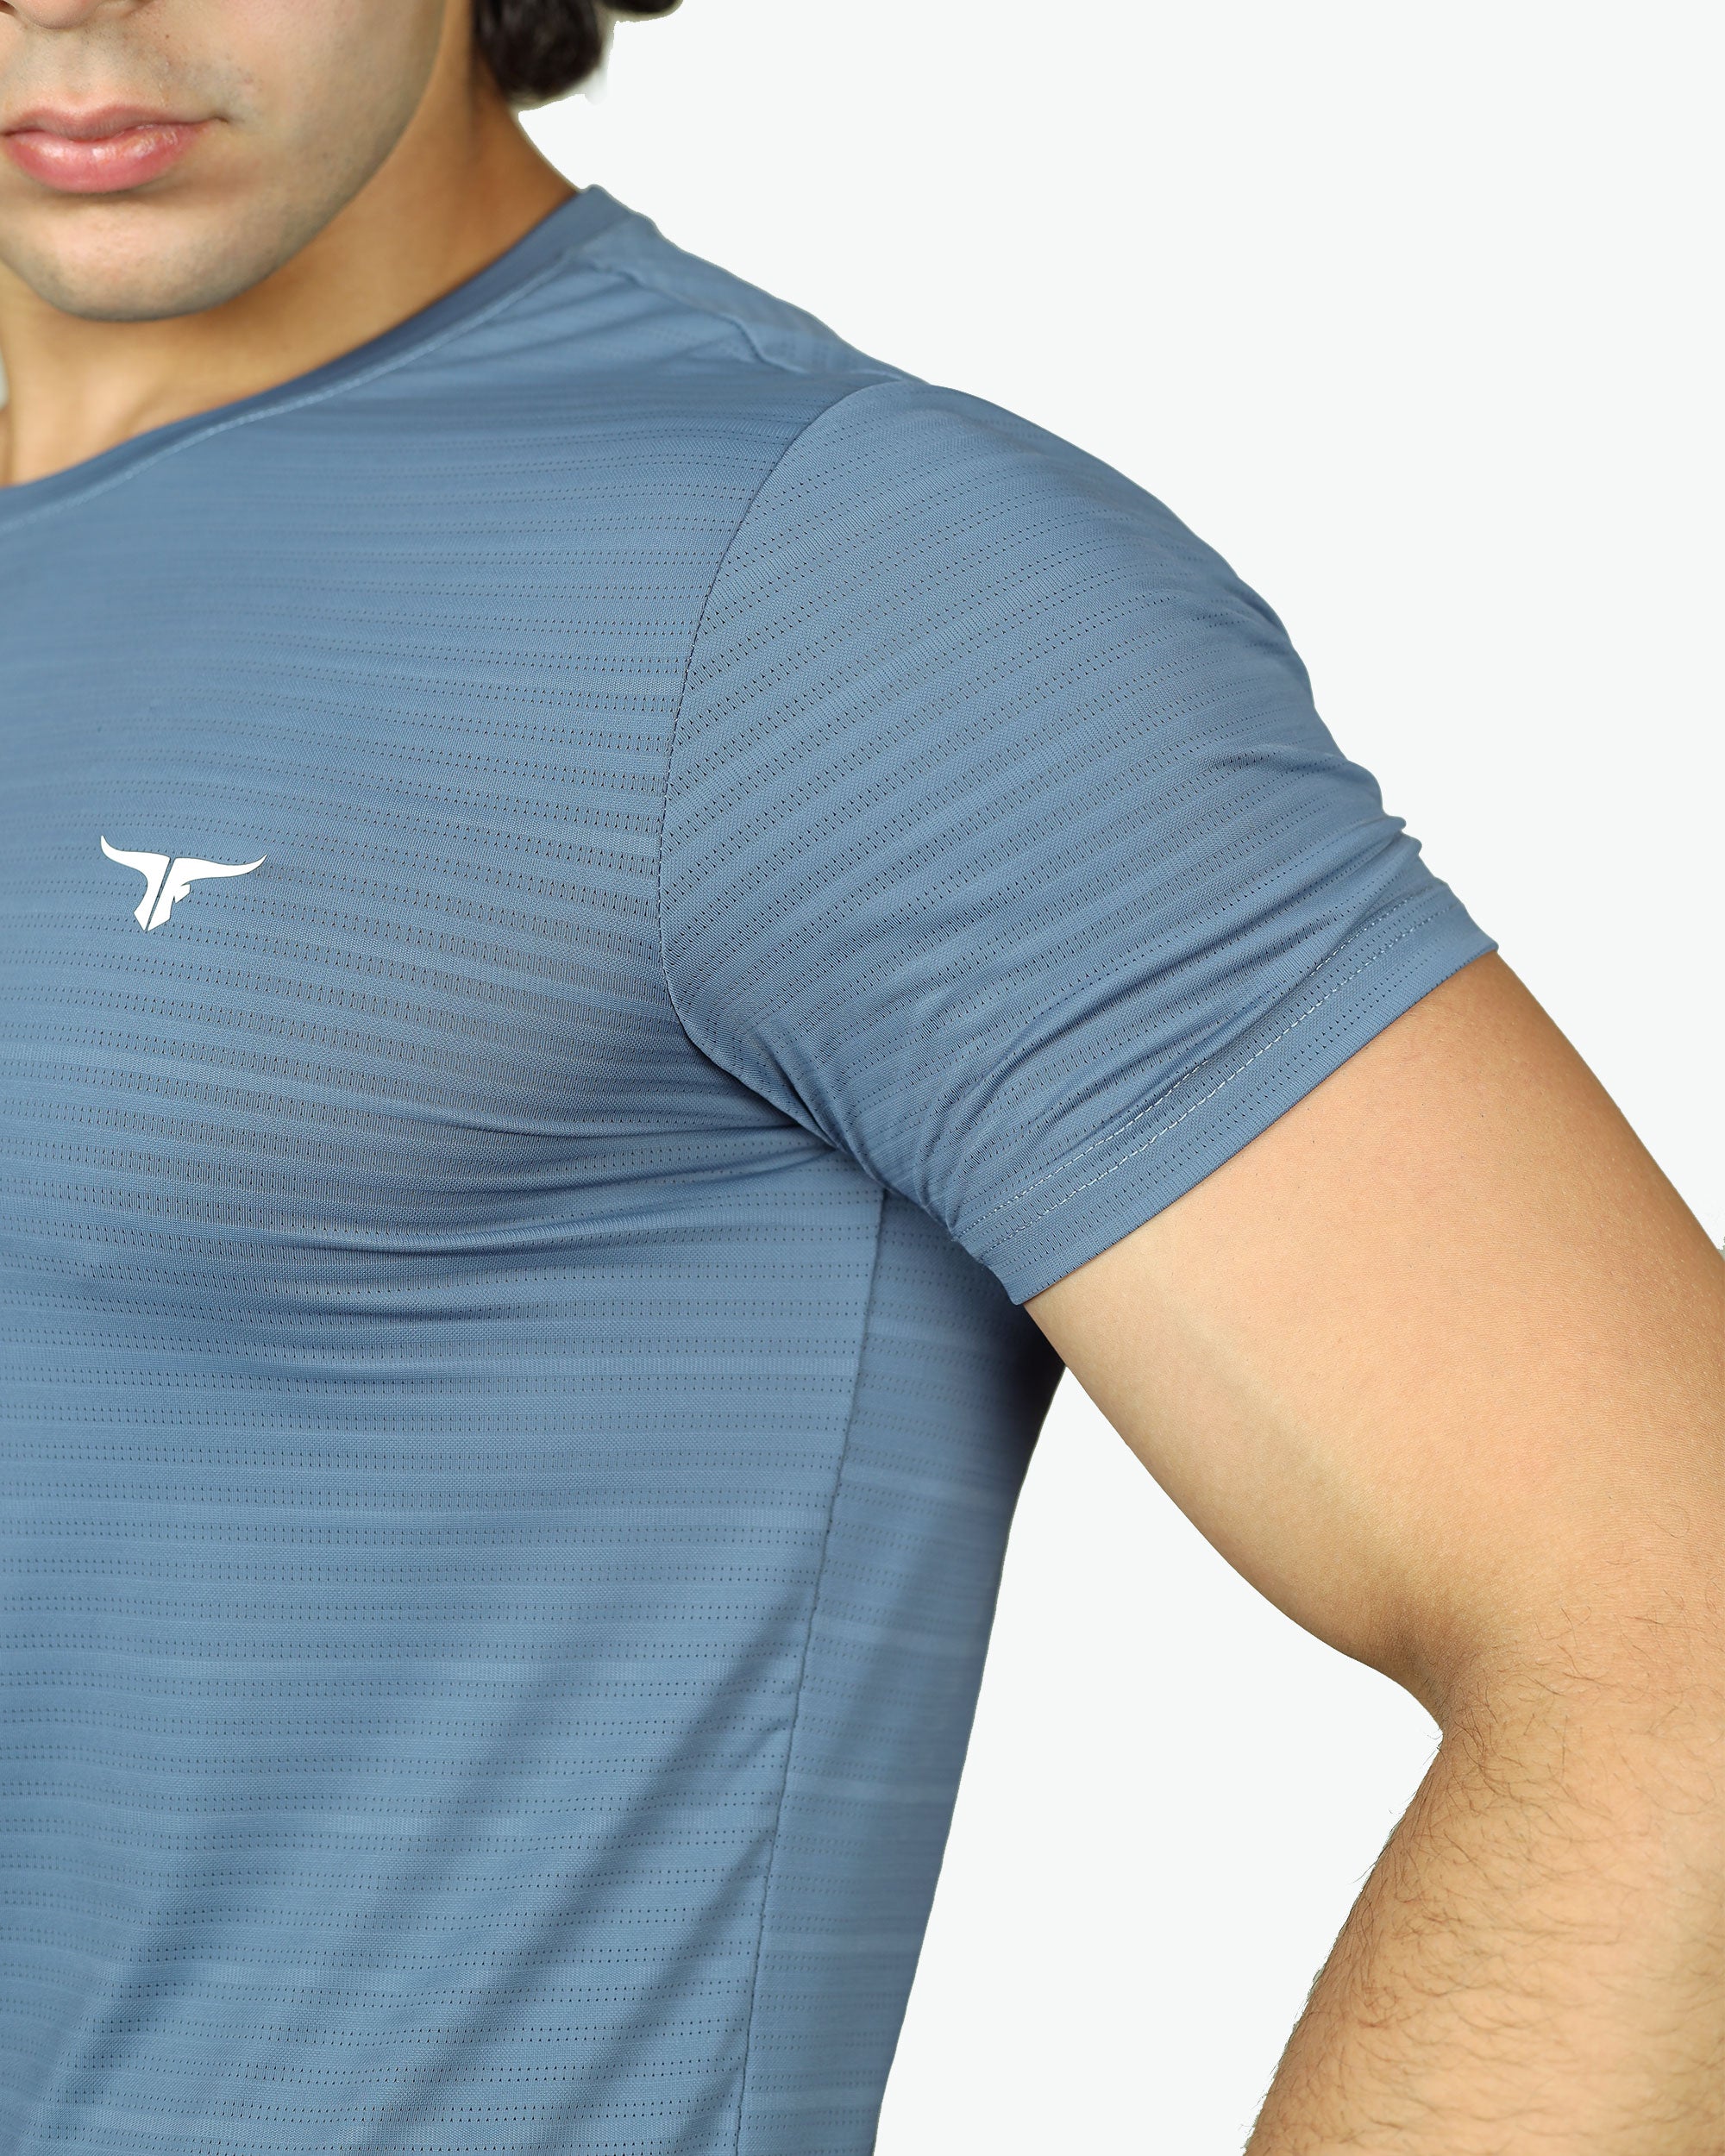 AirmanArmor Muscle Fit T-Shirt - THUGFIT